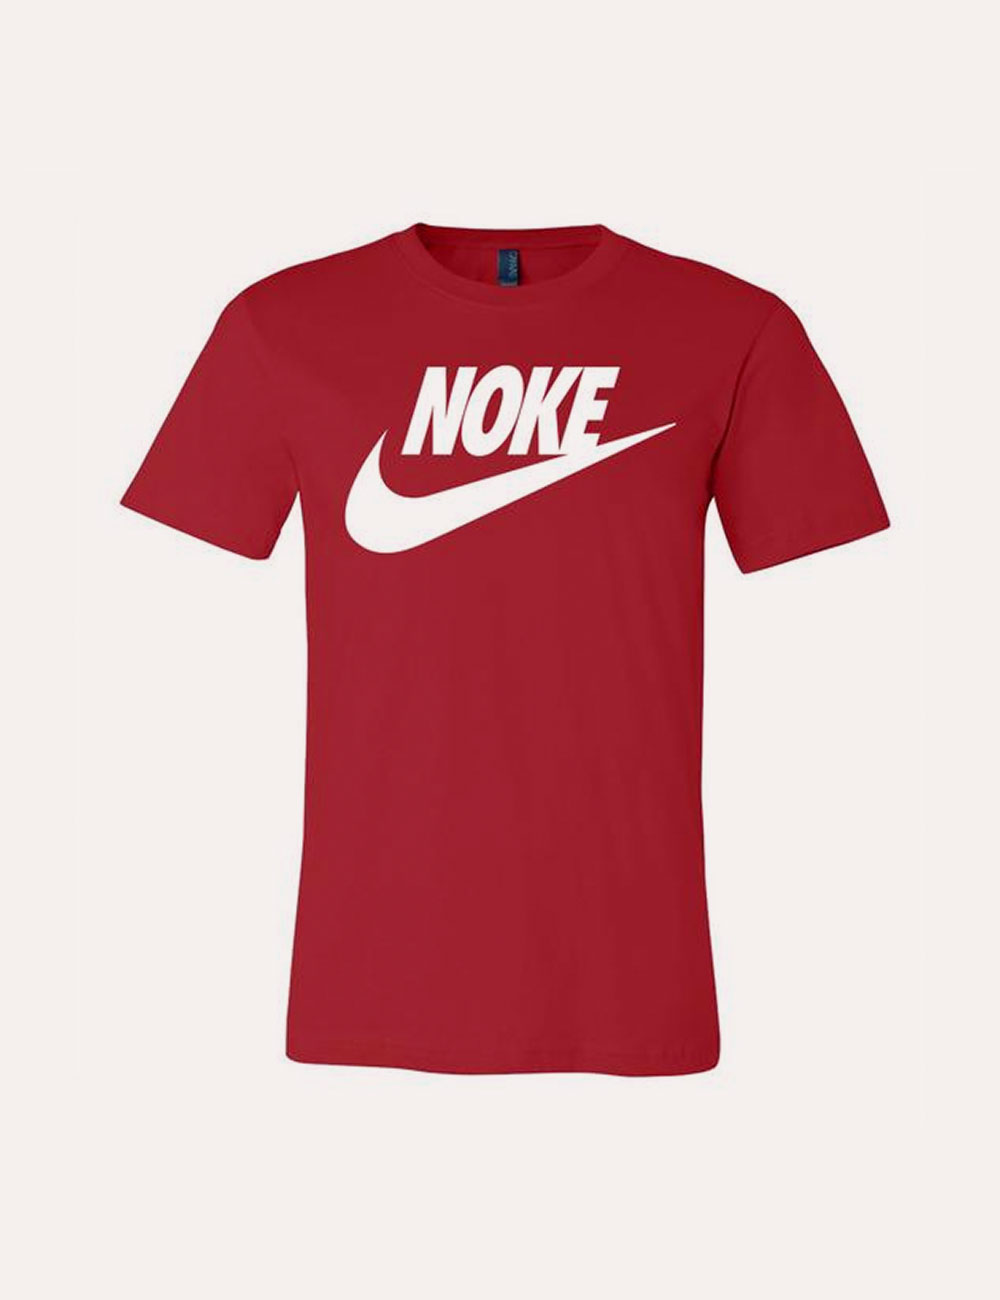 Roanoke Made - Merch - Roanoke - Noke T-Shirt